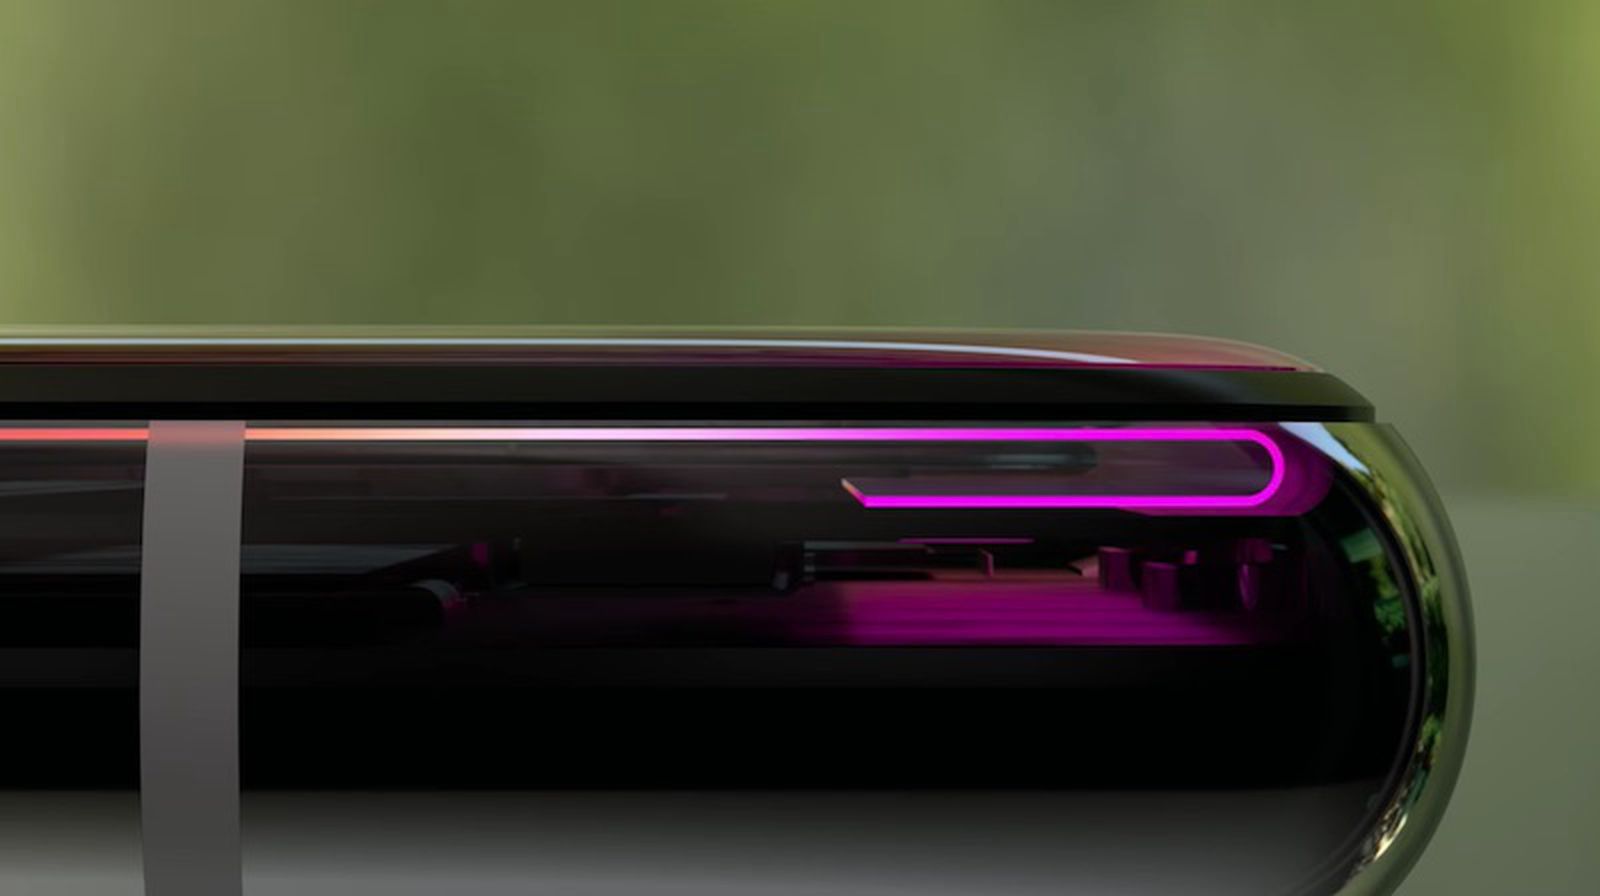 The Information: Борьба Apple с разработкой технологии MicroLED привела к изменениям в iPhone X и зависимости от Samsung